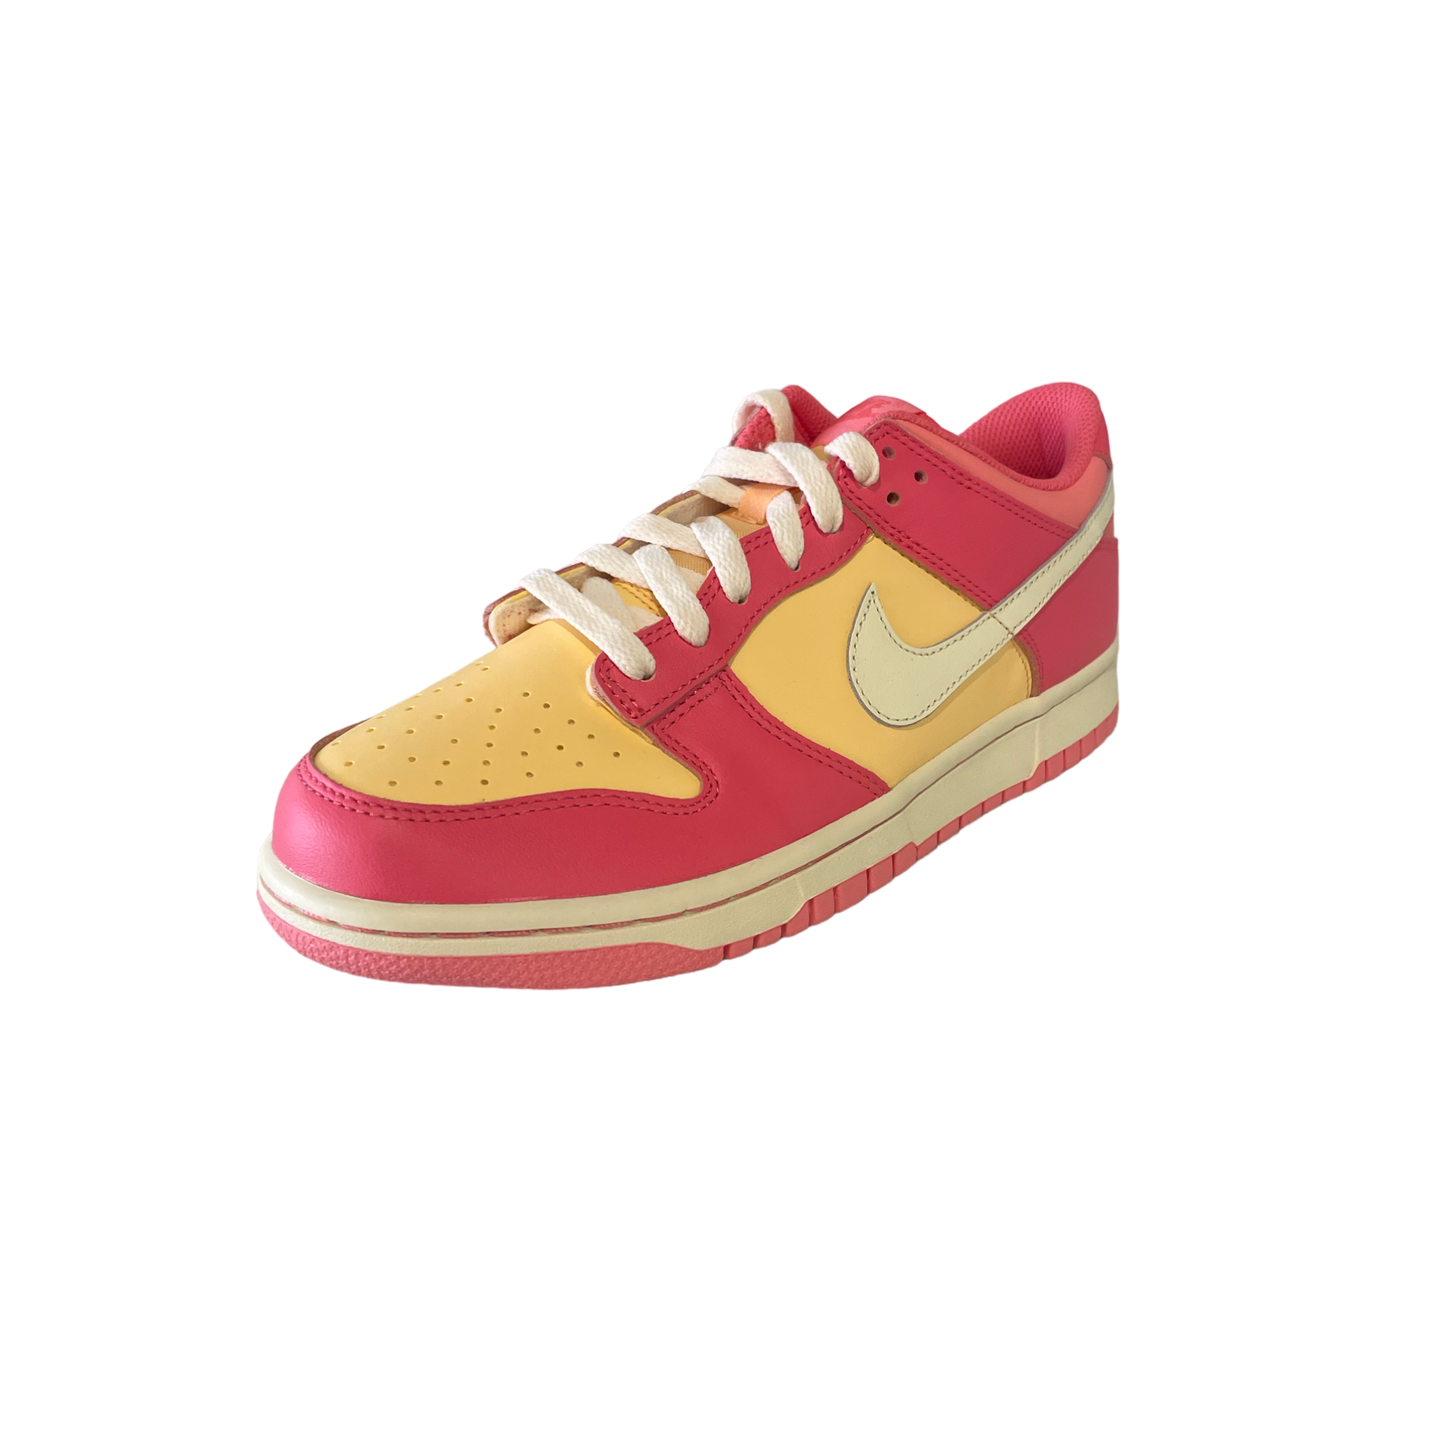 Nike Dunk Low Strawberry Peach Cream (GS)